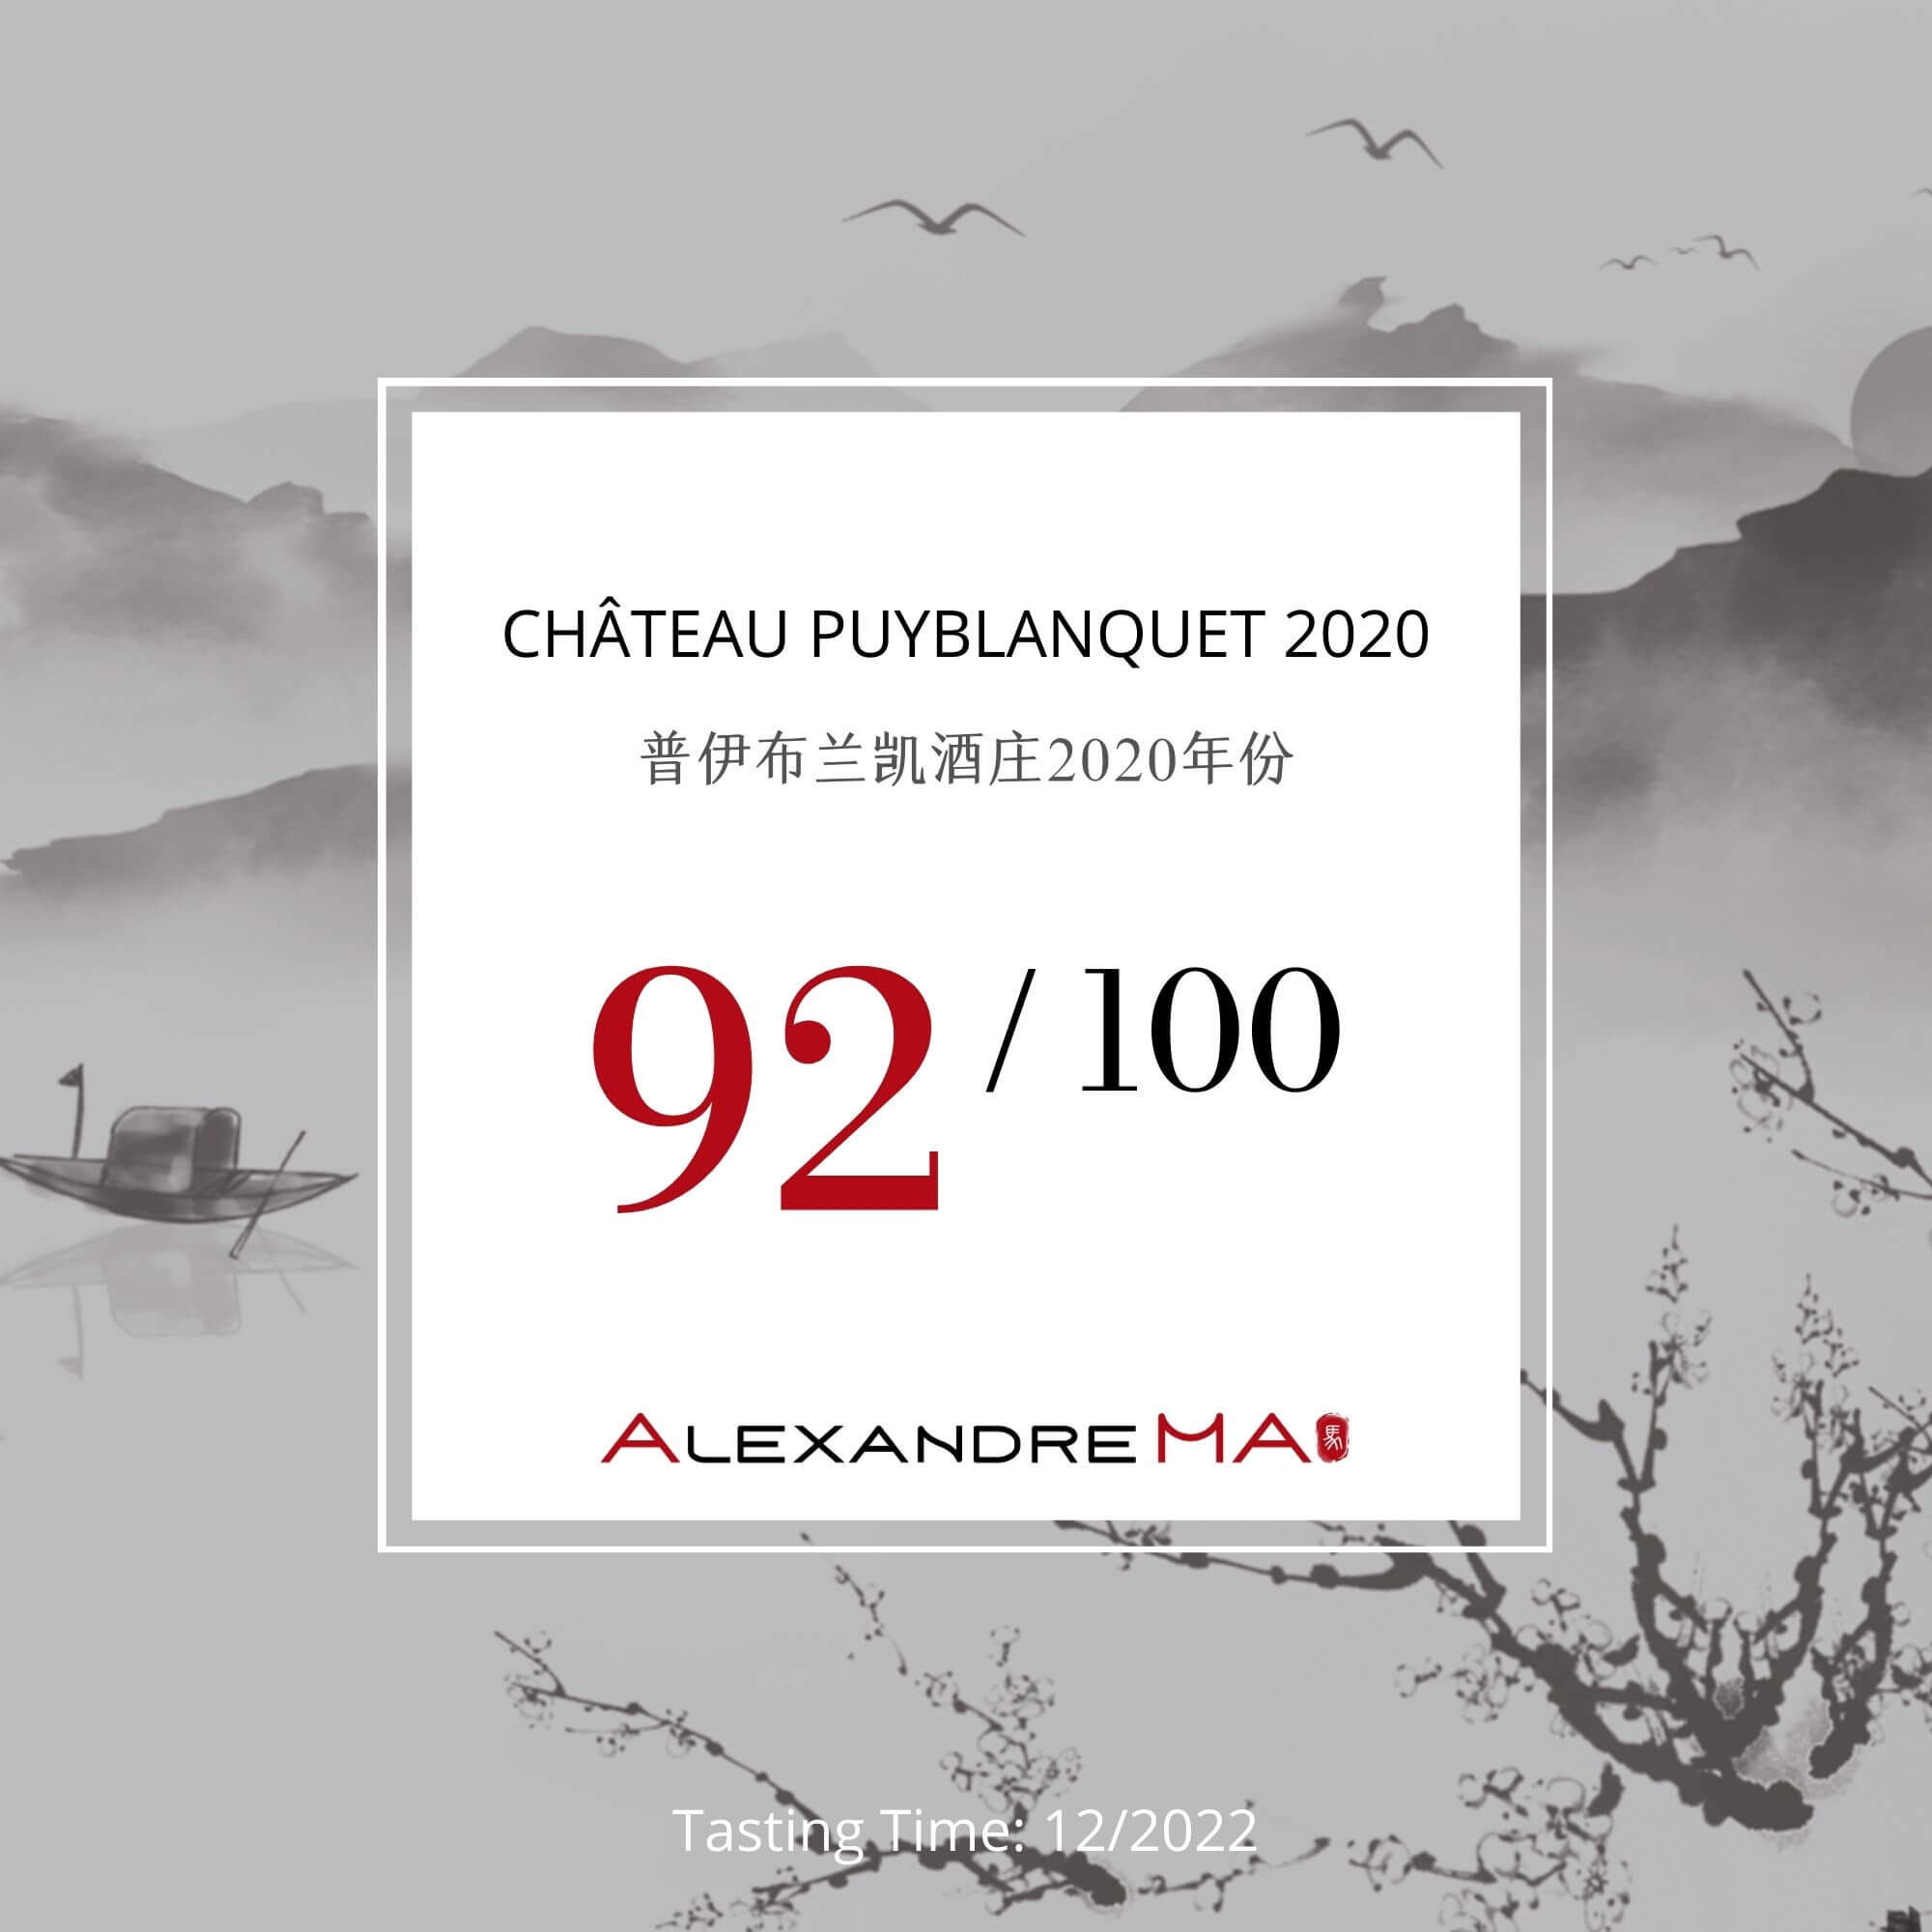 Château Puyblanquet 2020 - Alexandre MA